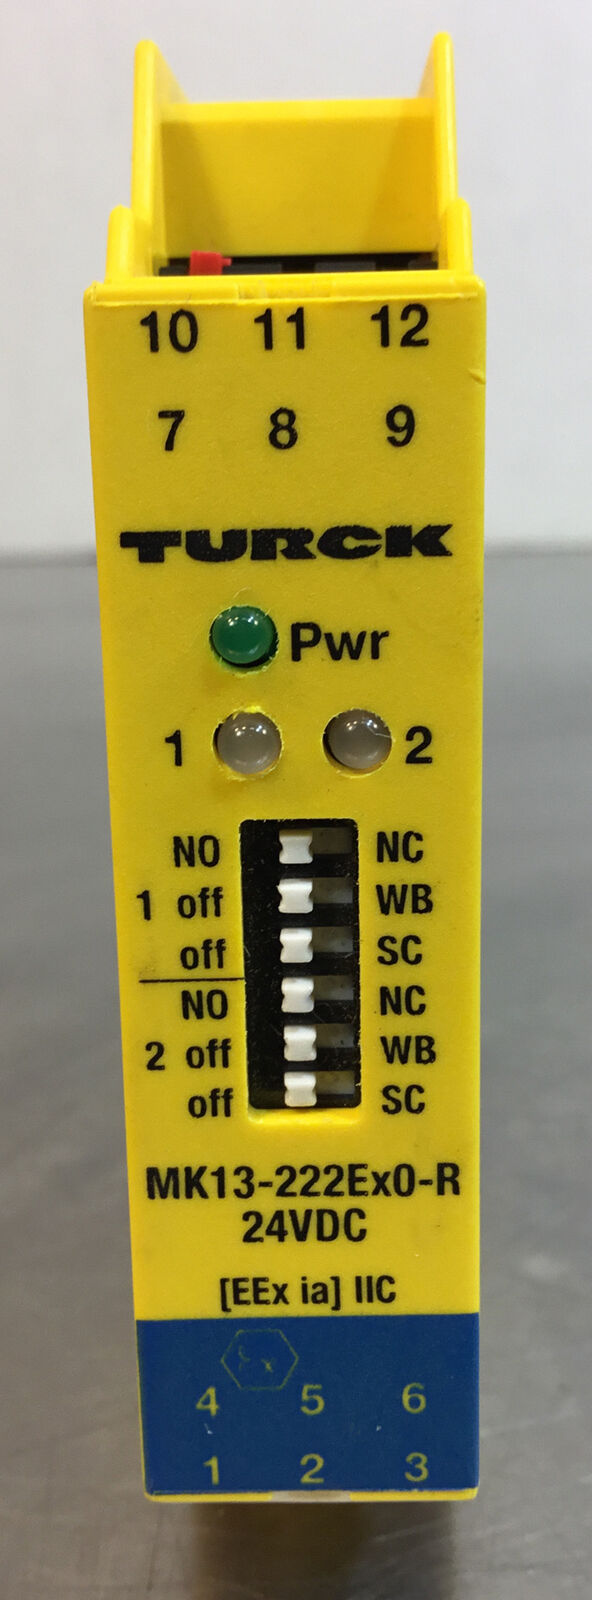 Turck MK13-222Ex0-R/24VDC Switching Amplifier      5E